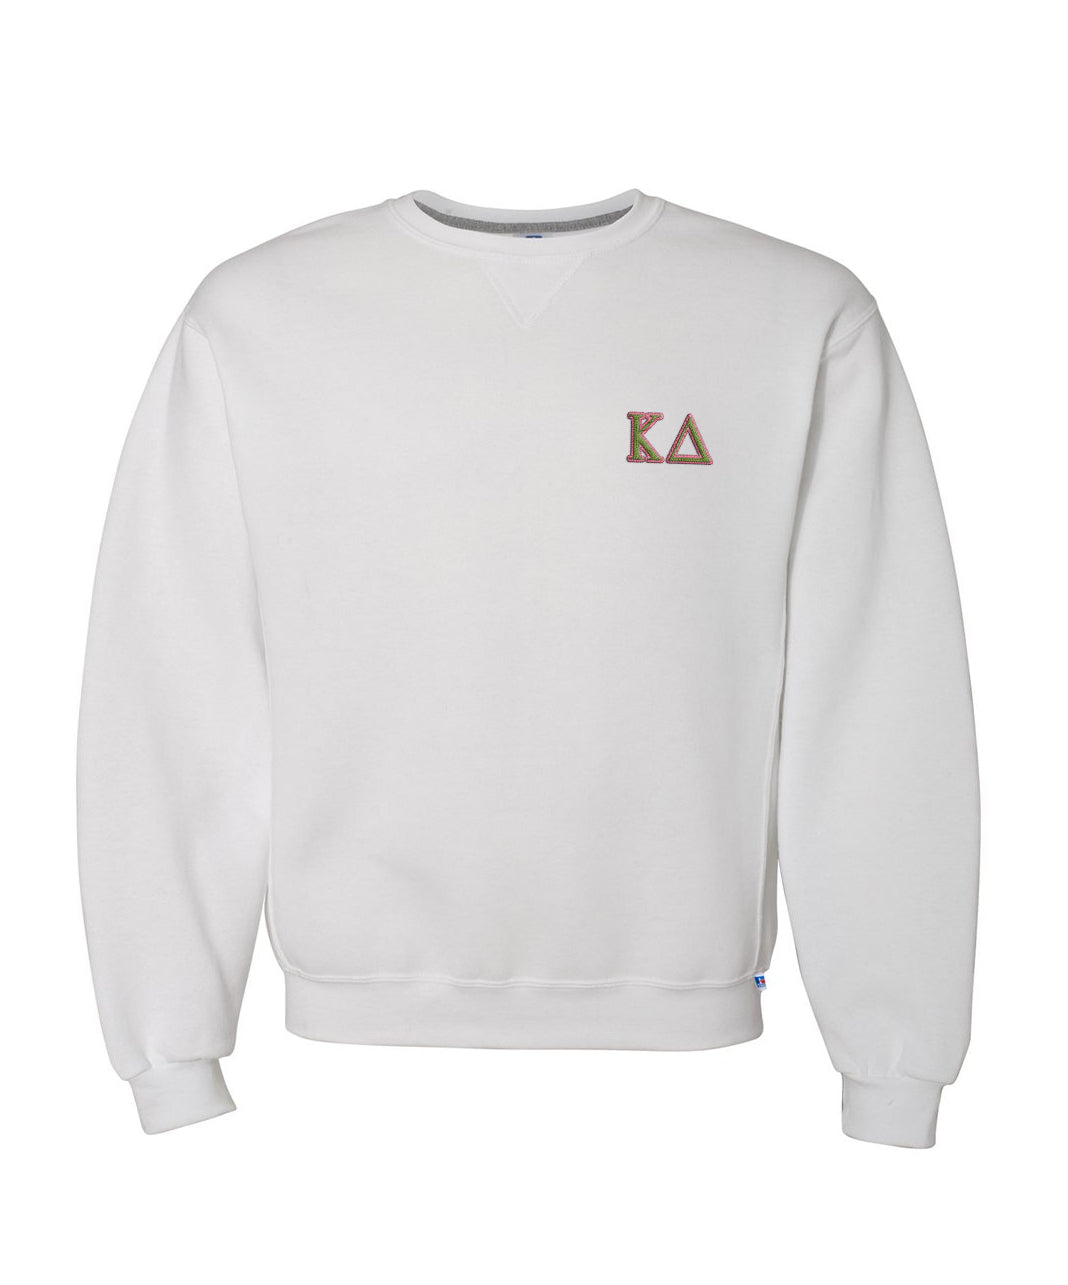 Kappa Delta Embroidered Crewneck Sweatshirt